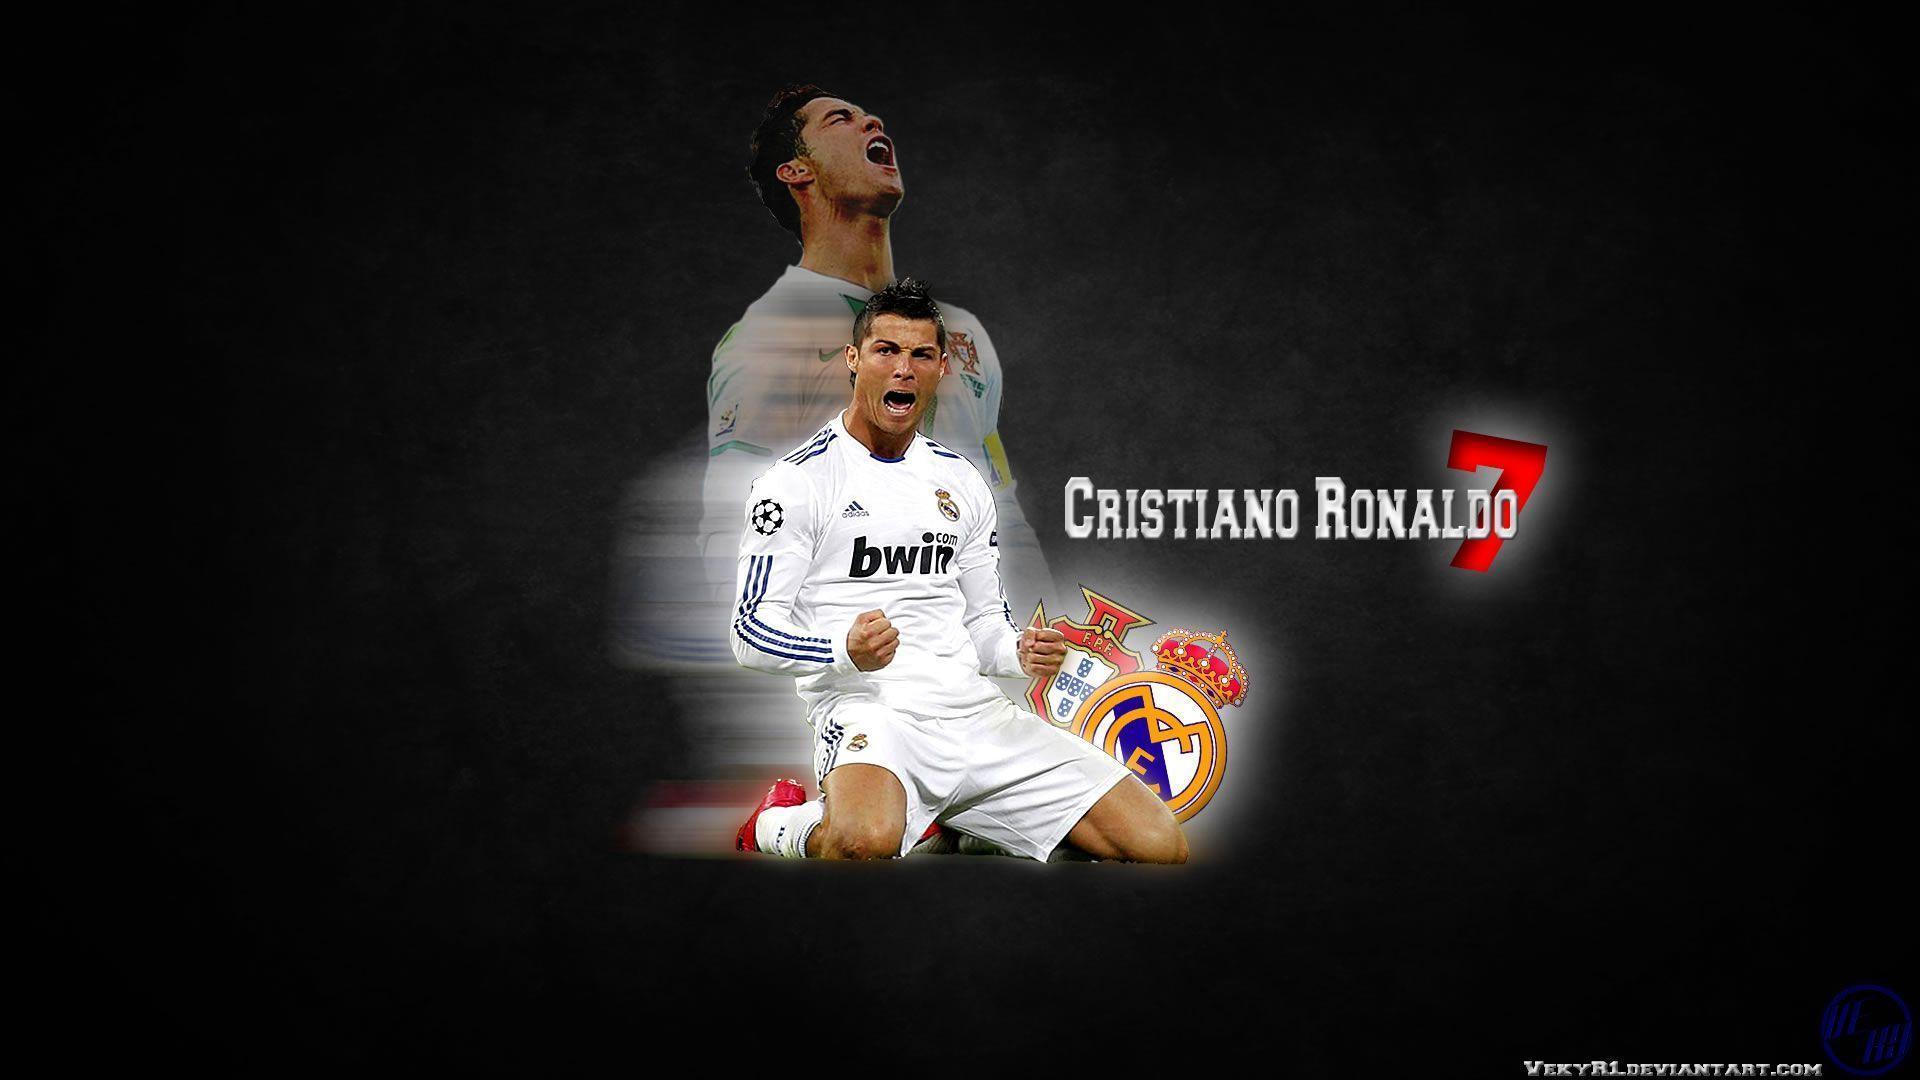 Cristiano Ronaldo Wallpaper 2016 Wallpaper: Players, Teams